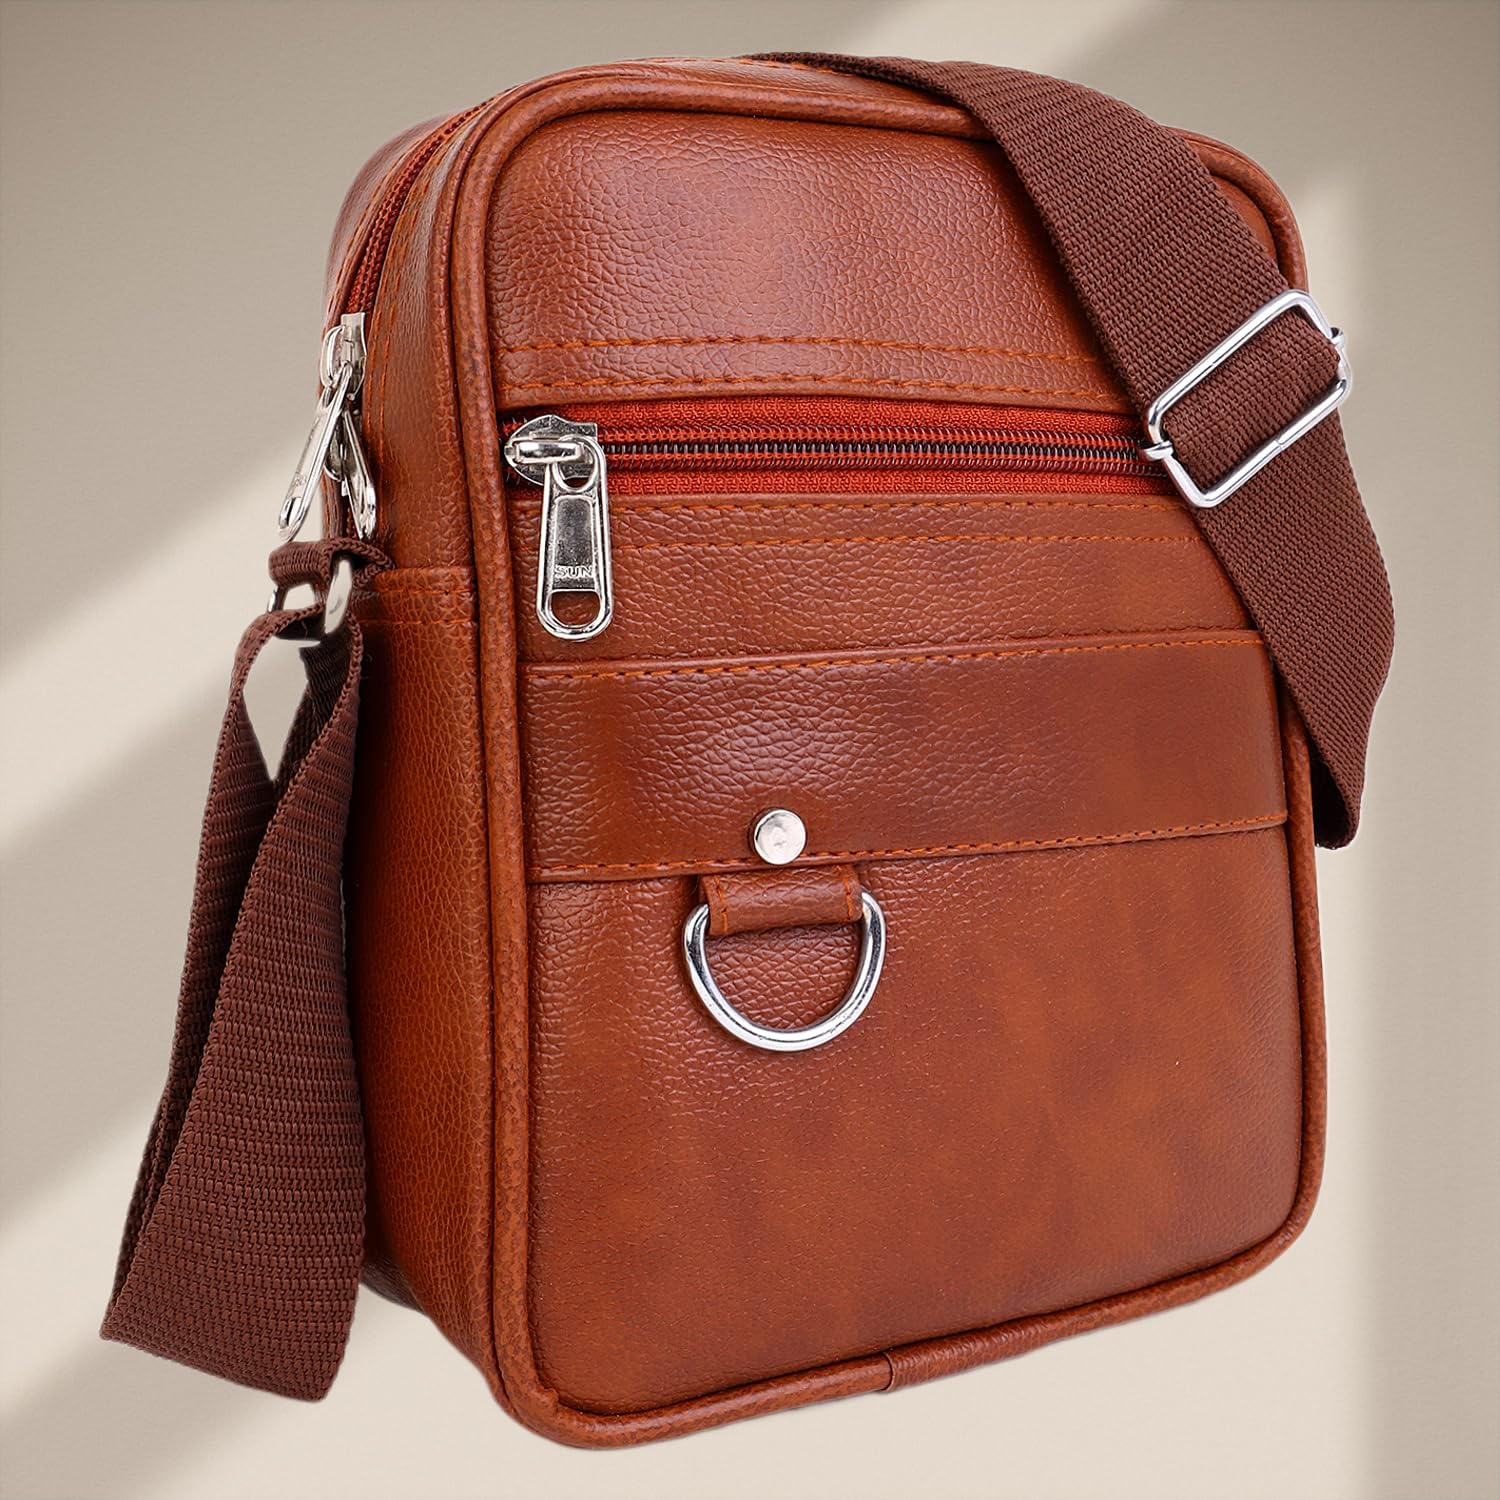 CIMONI® Premium Vegan Leather Sling Bag Hand Bag Stylish Elegant Unique PU Design Purse Strap Crossbody Side Sling Bag Unisex (Tan)